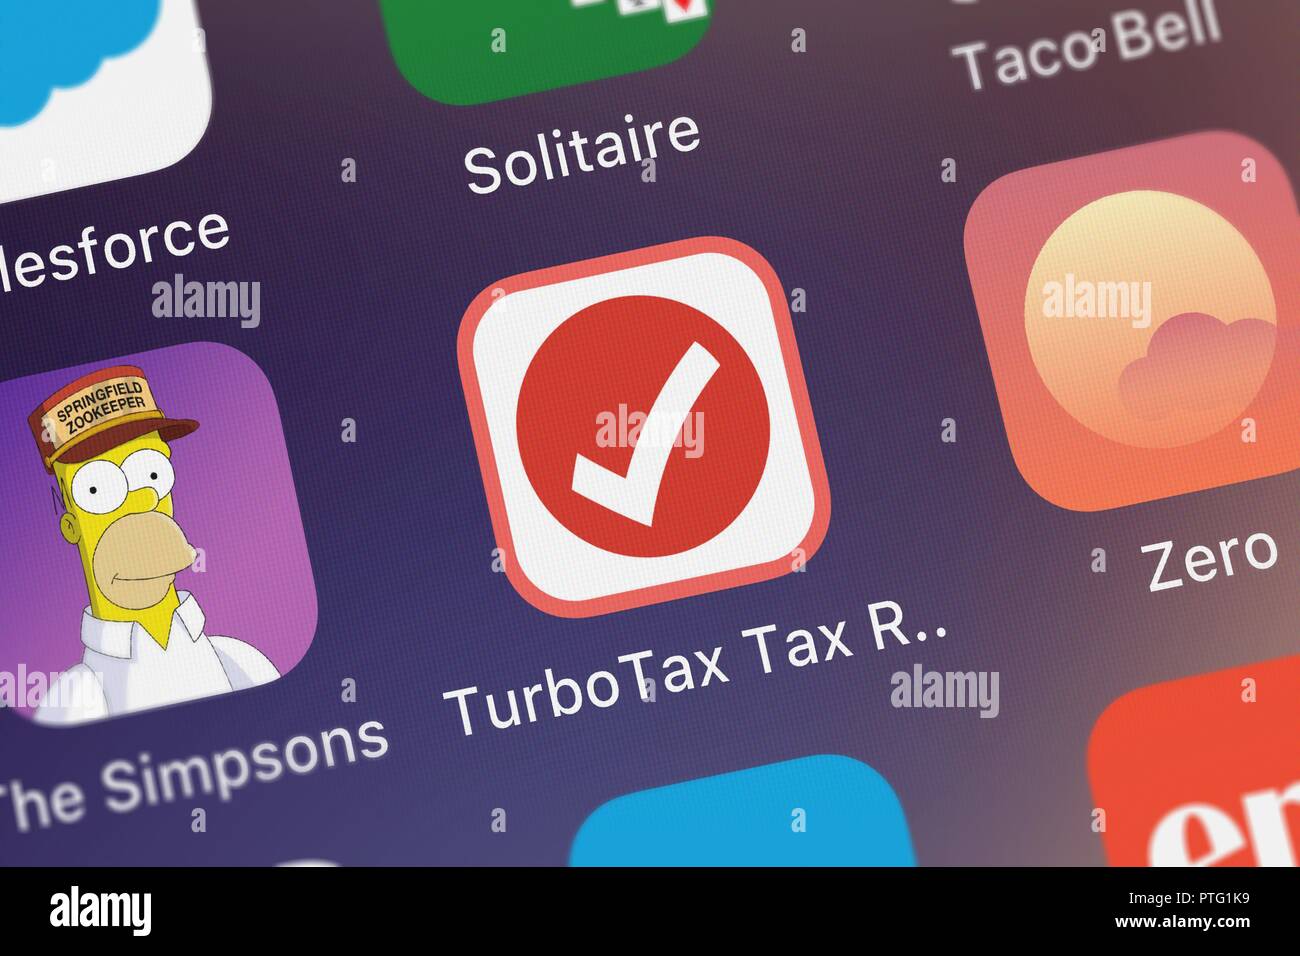 turbotax 2015 home and business screenshot